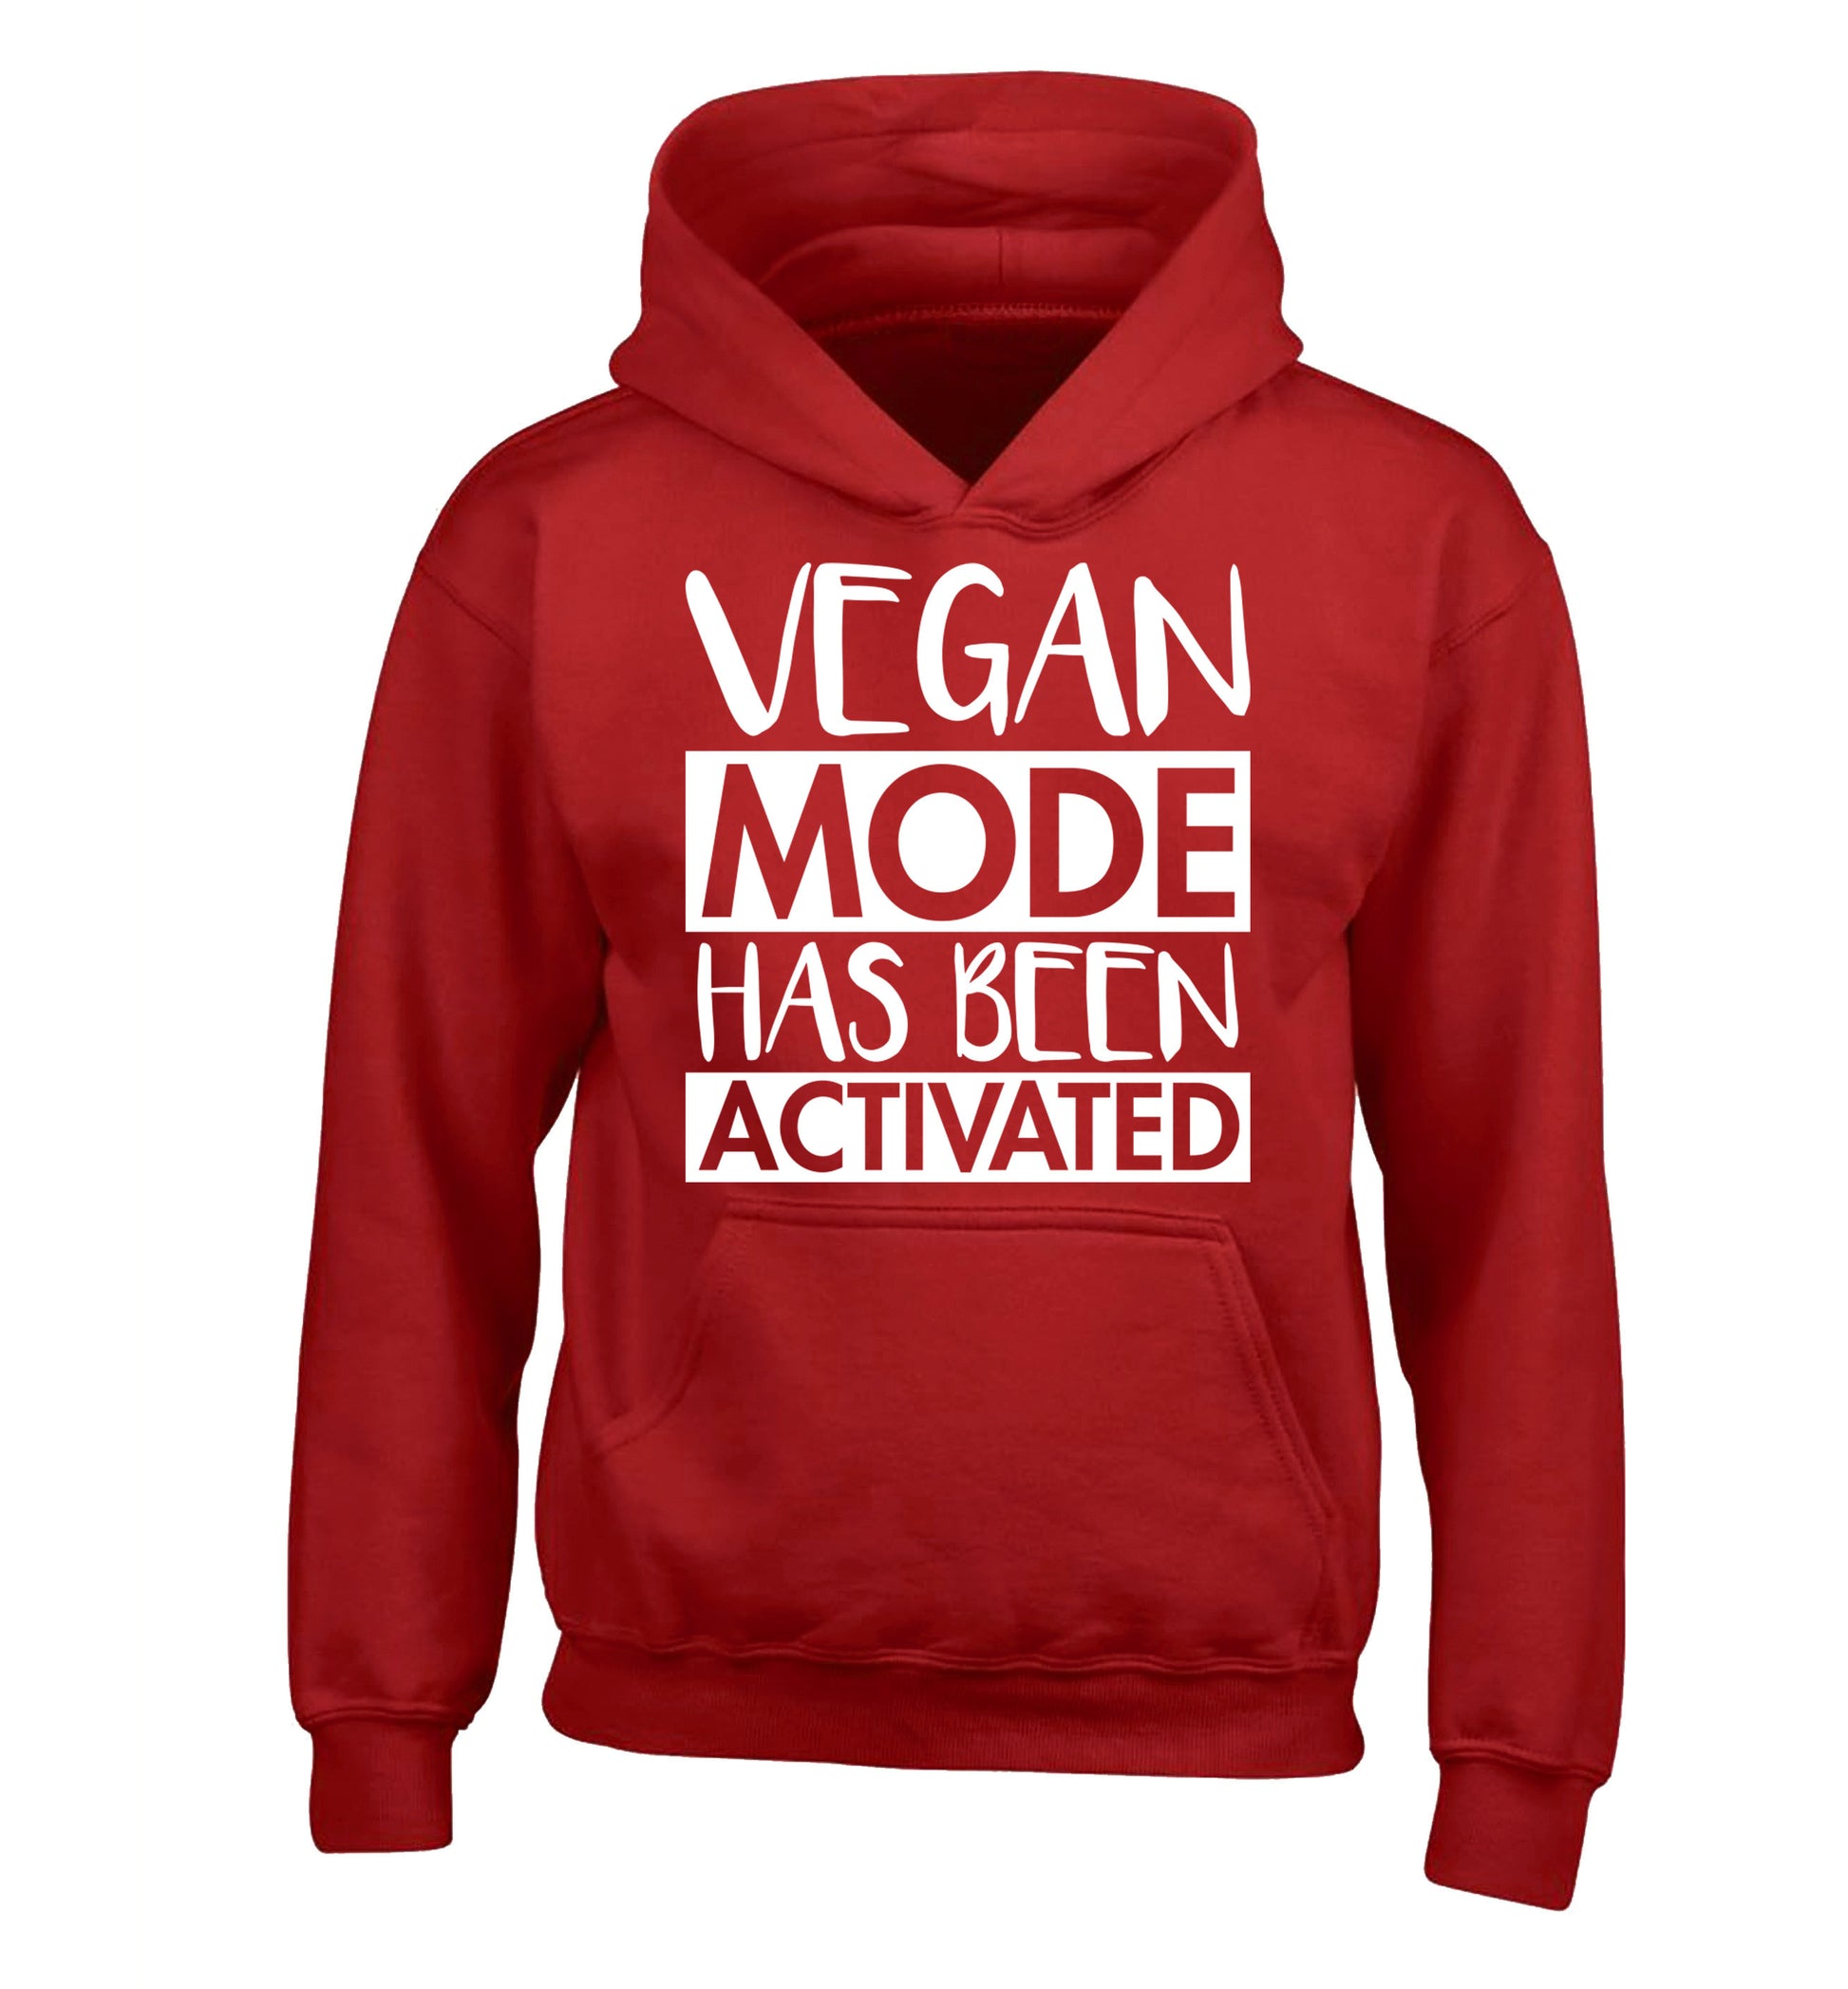 Vegan mode activated children's red hoodie 12-14 Years